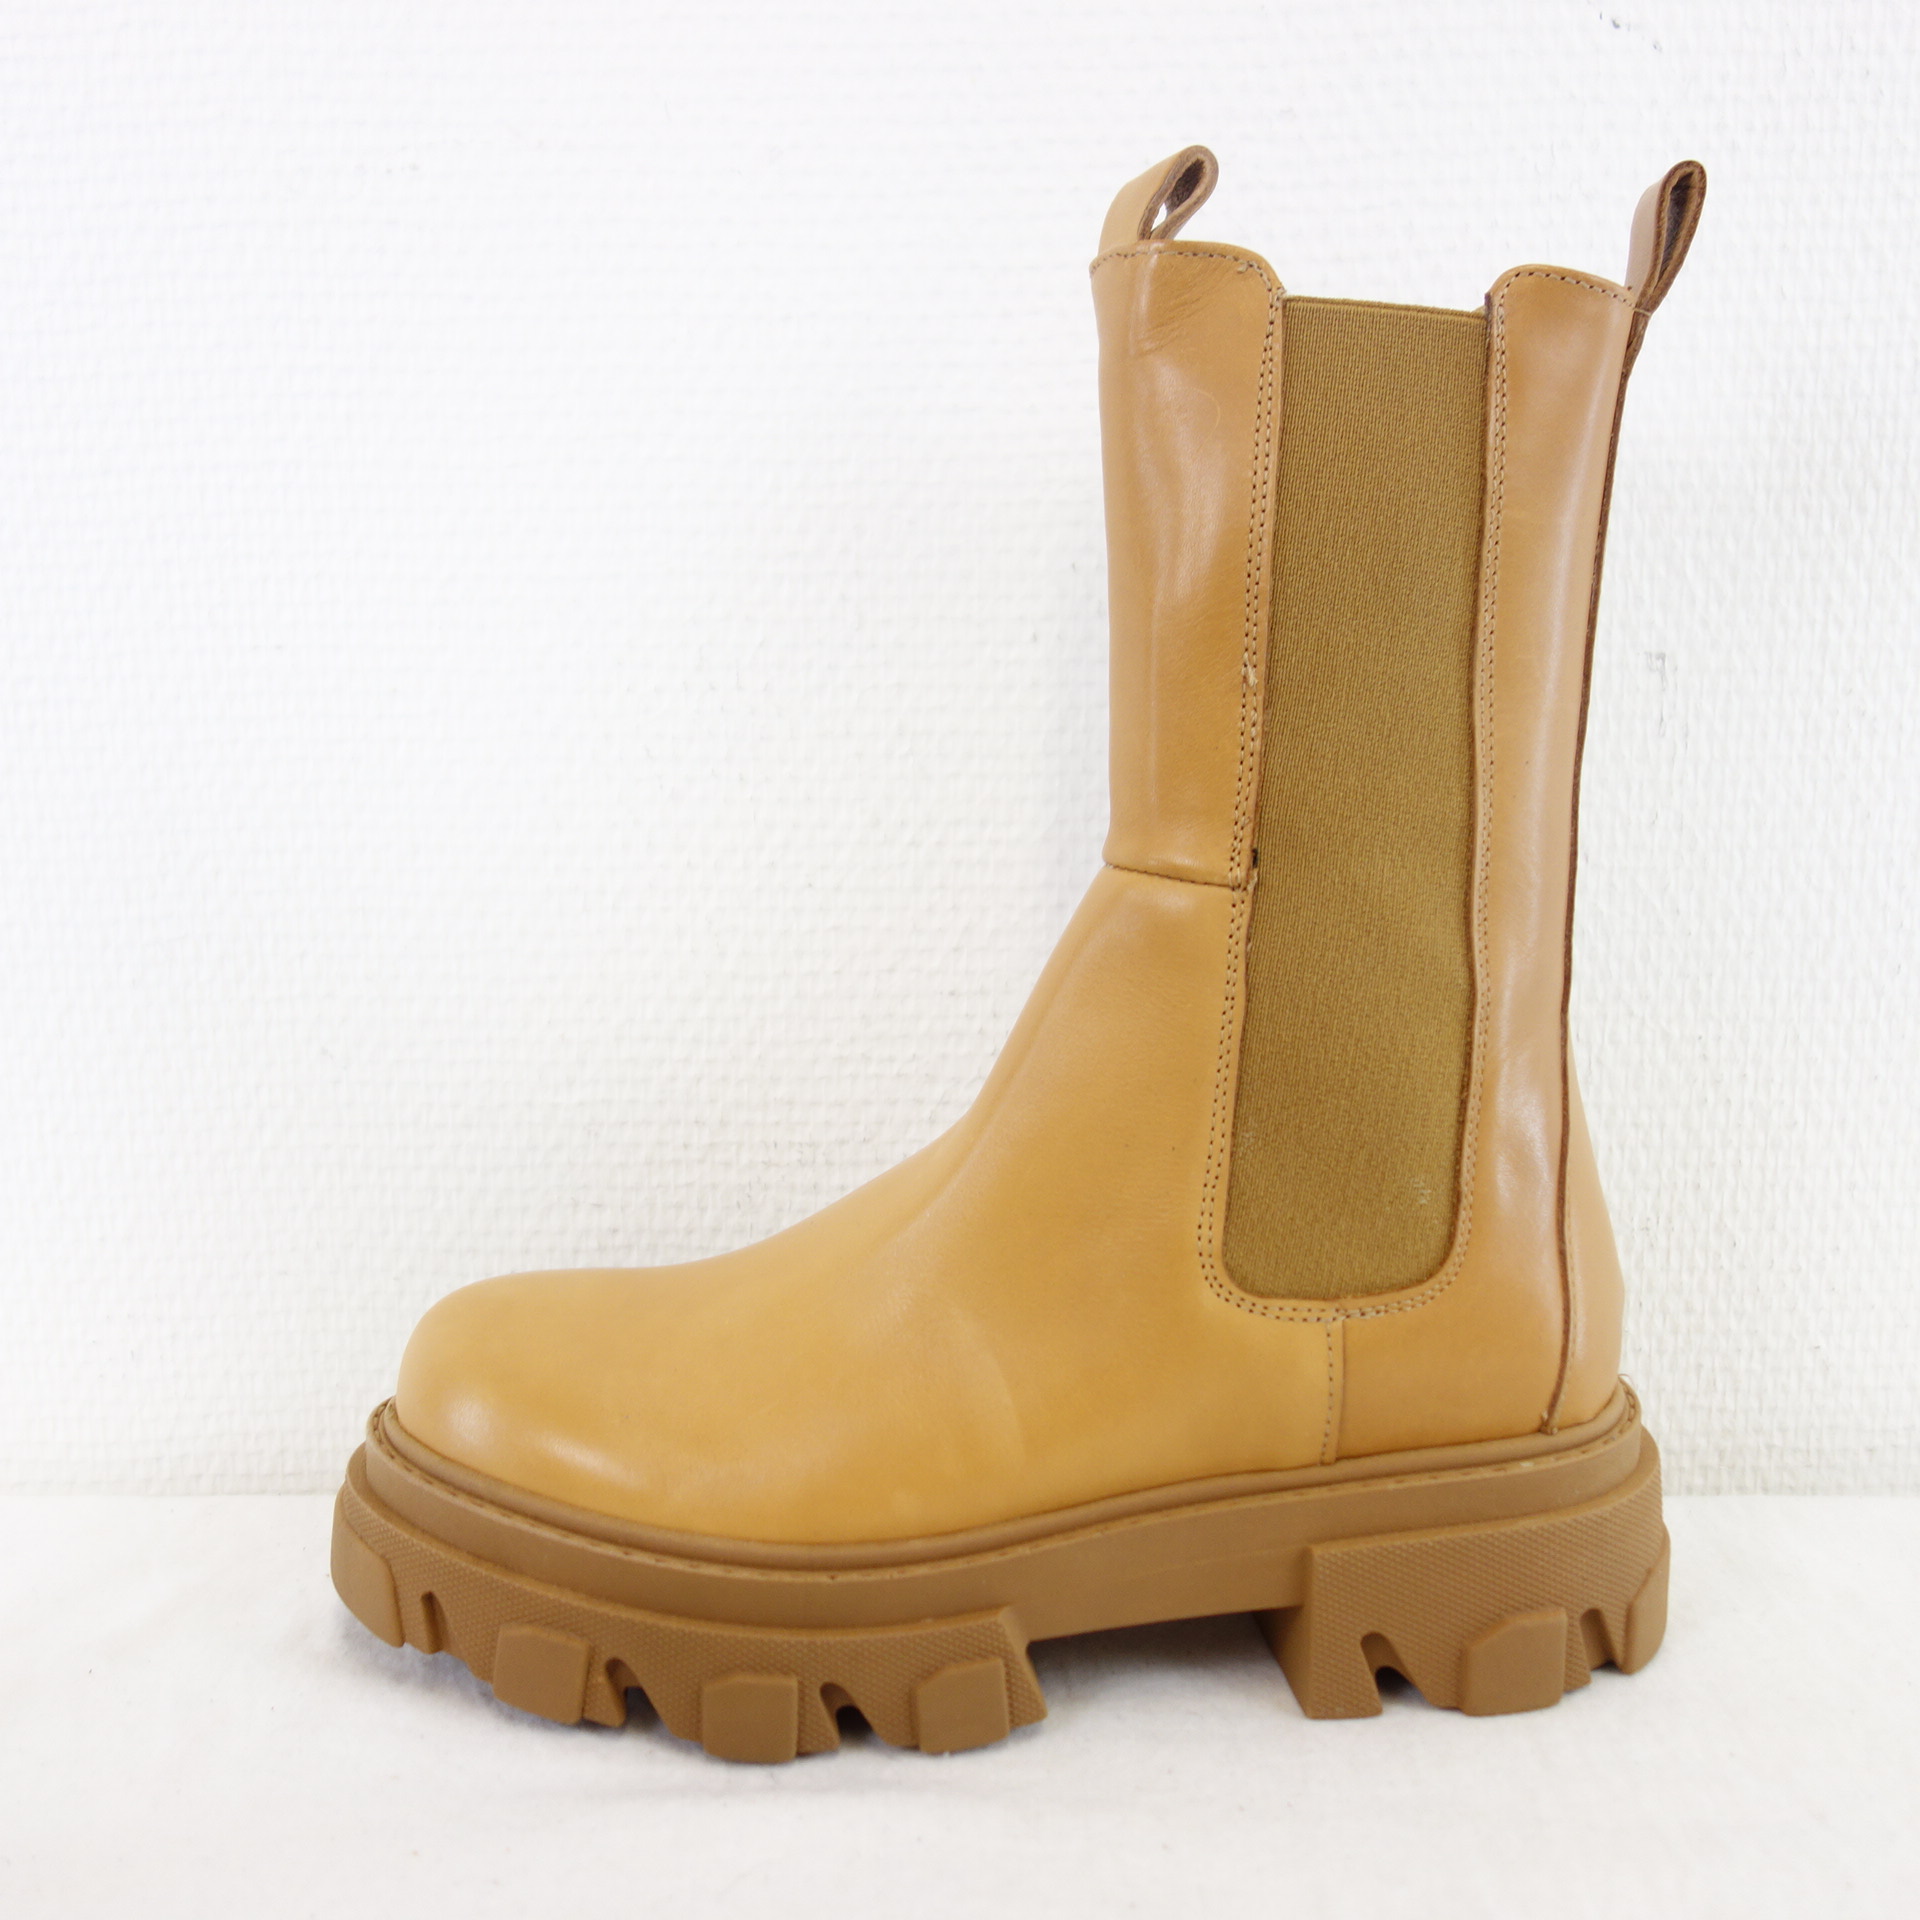 BUKELA Damen Schuhe Combat Boots Stiefel Leder Cognac Braun Gr 37 Ella